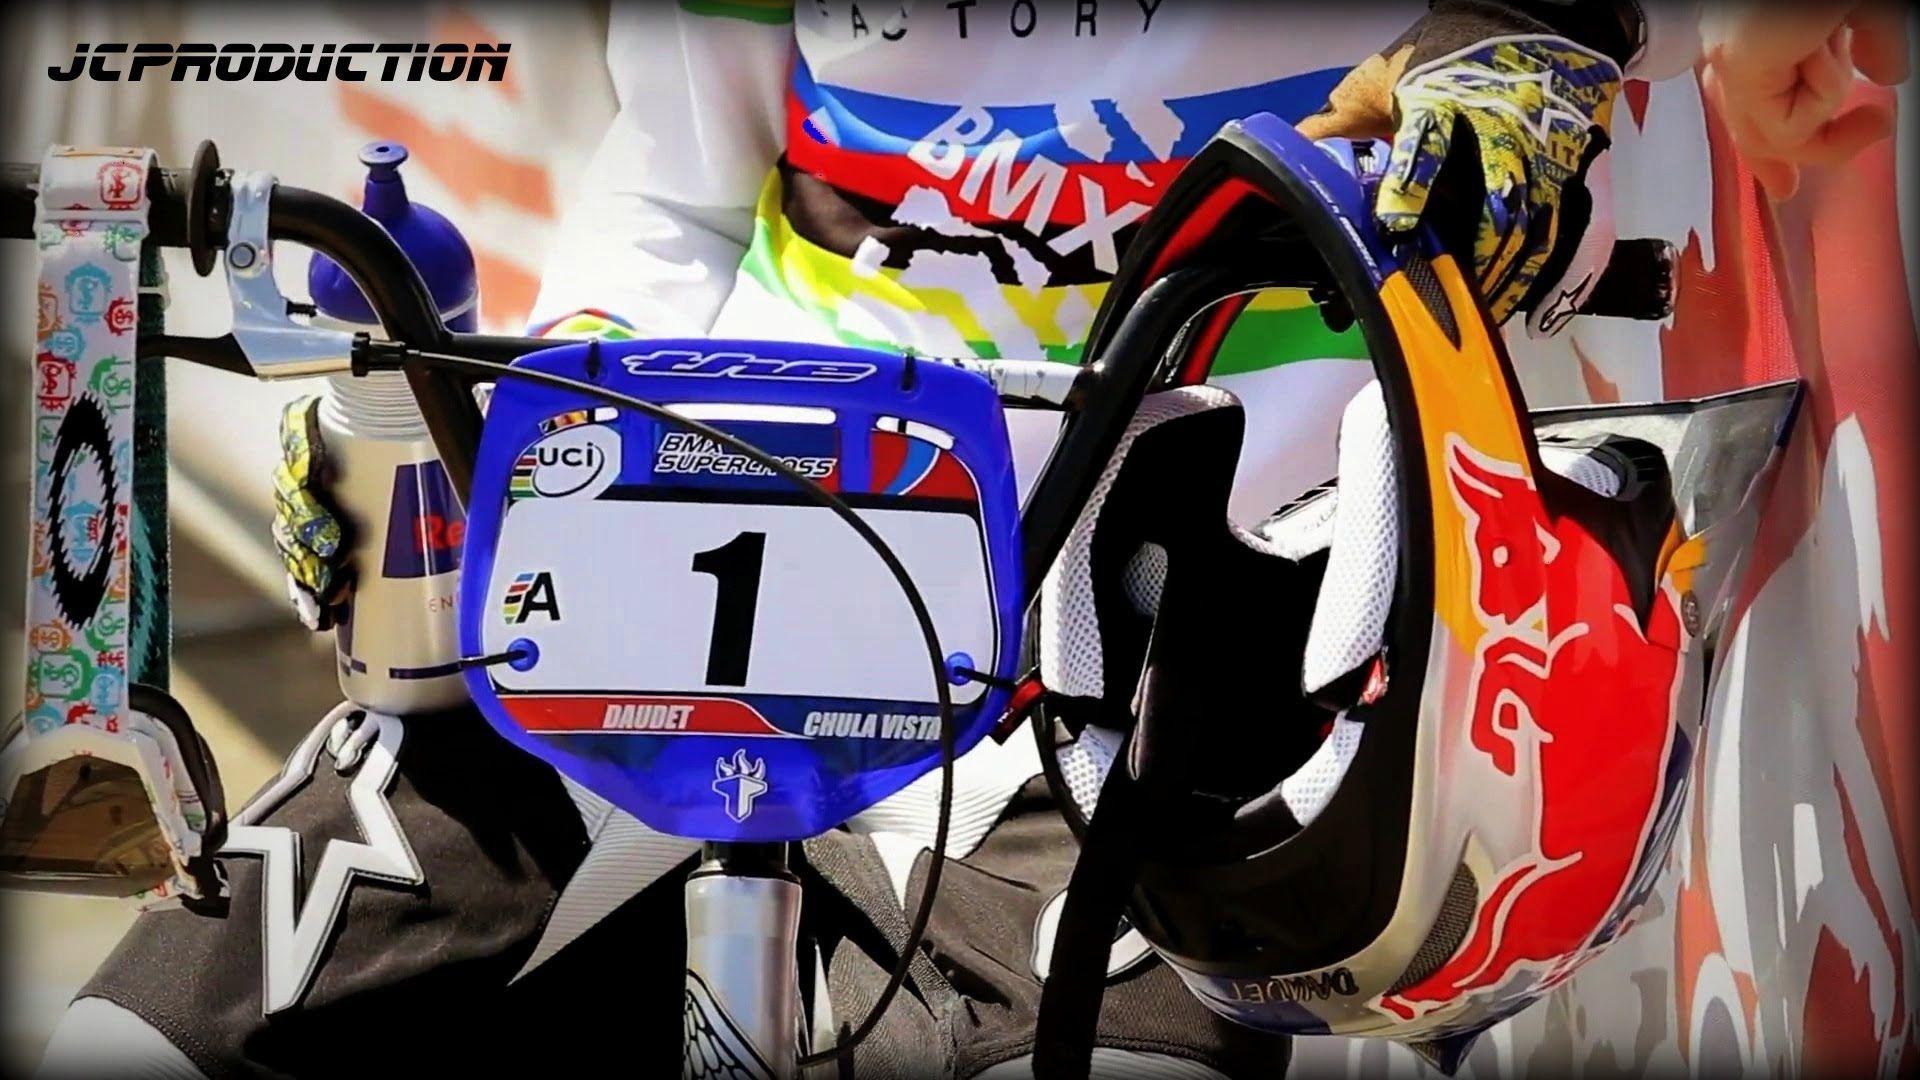 BMX RACE INSPIRATION 2